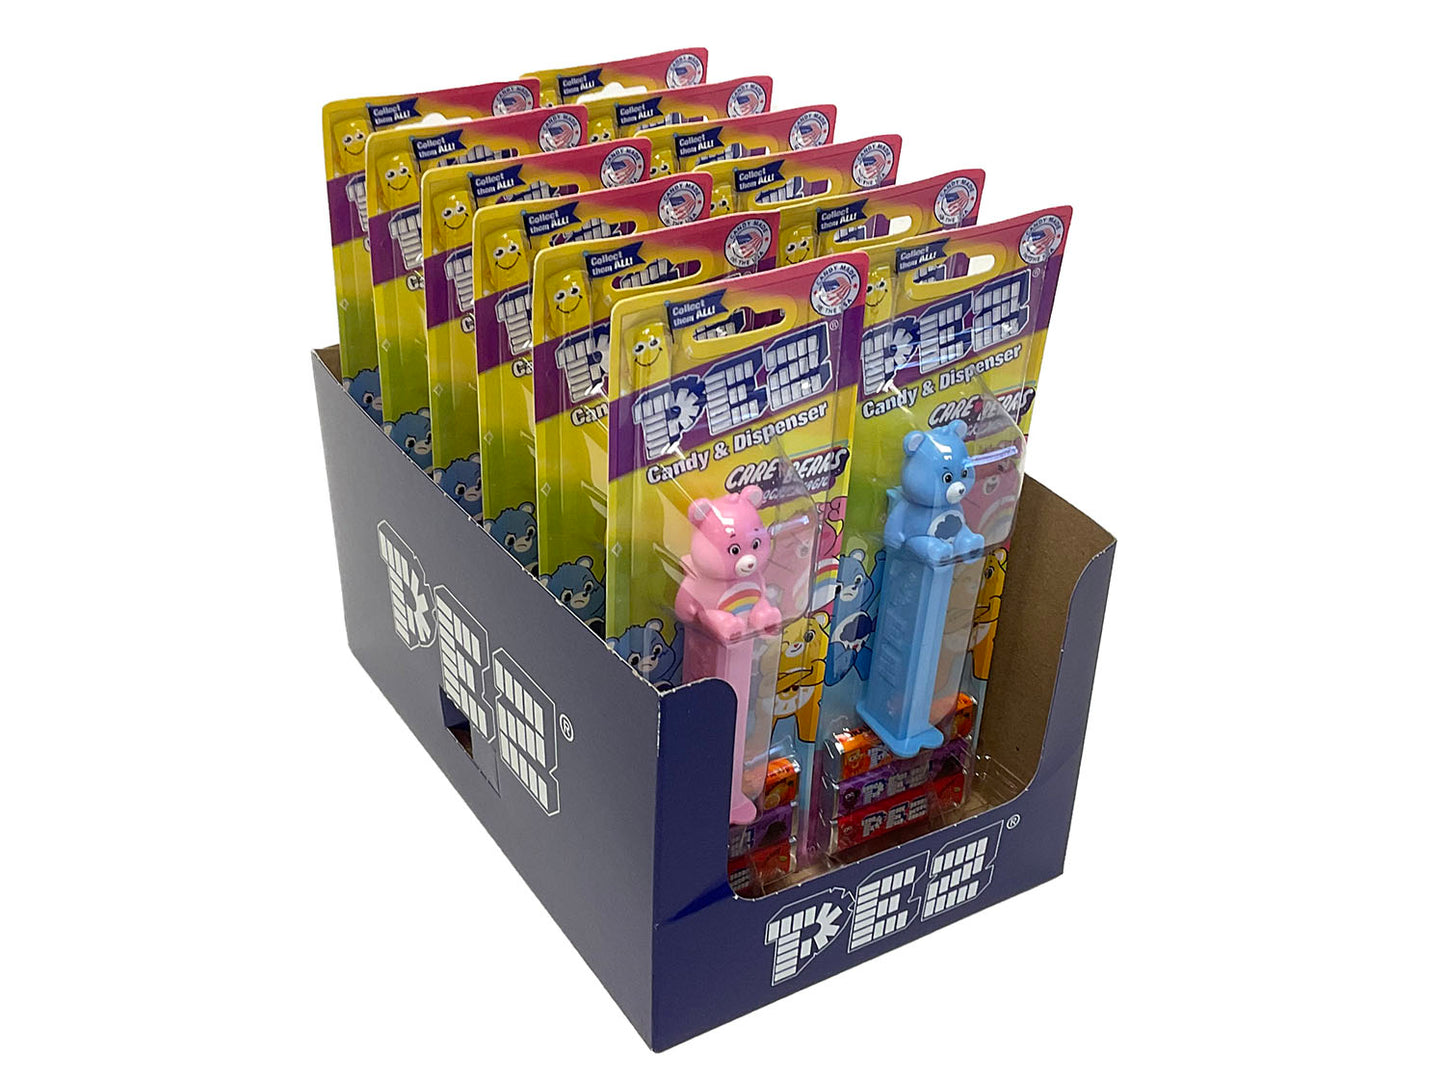 Pez Dispenser - Care Bears - display box of 12 assorted